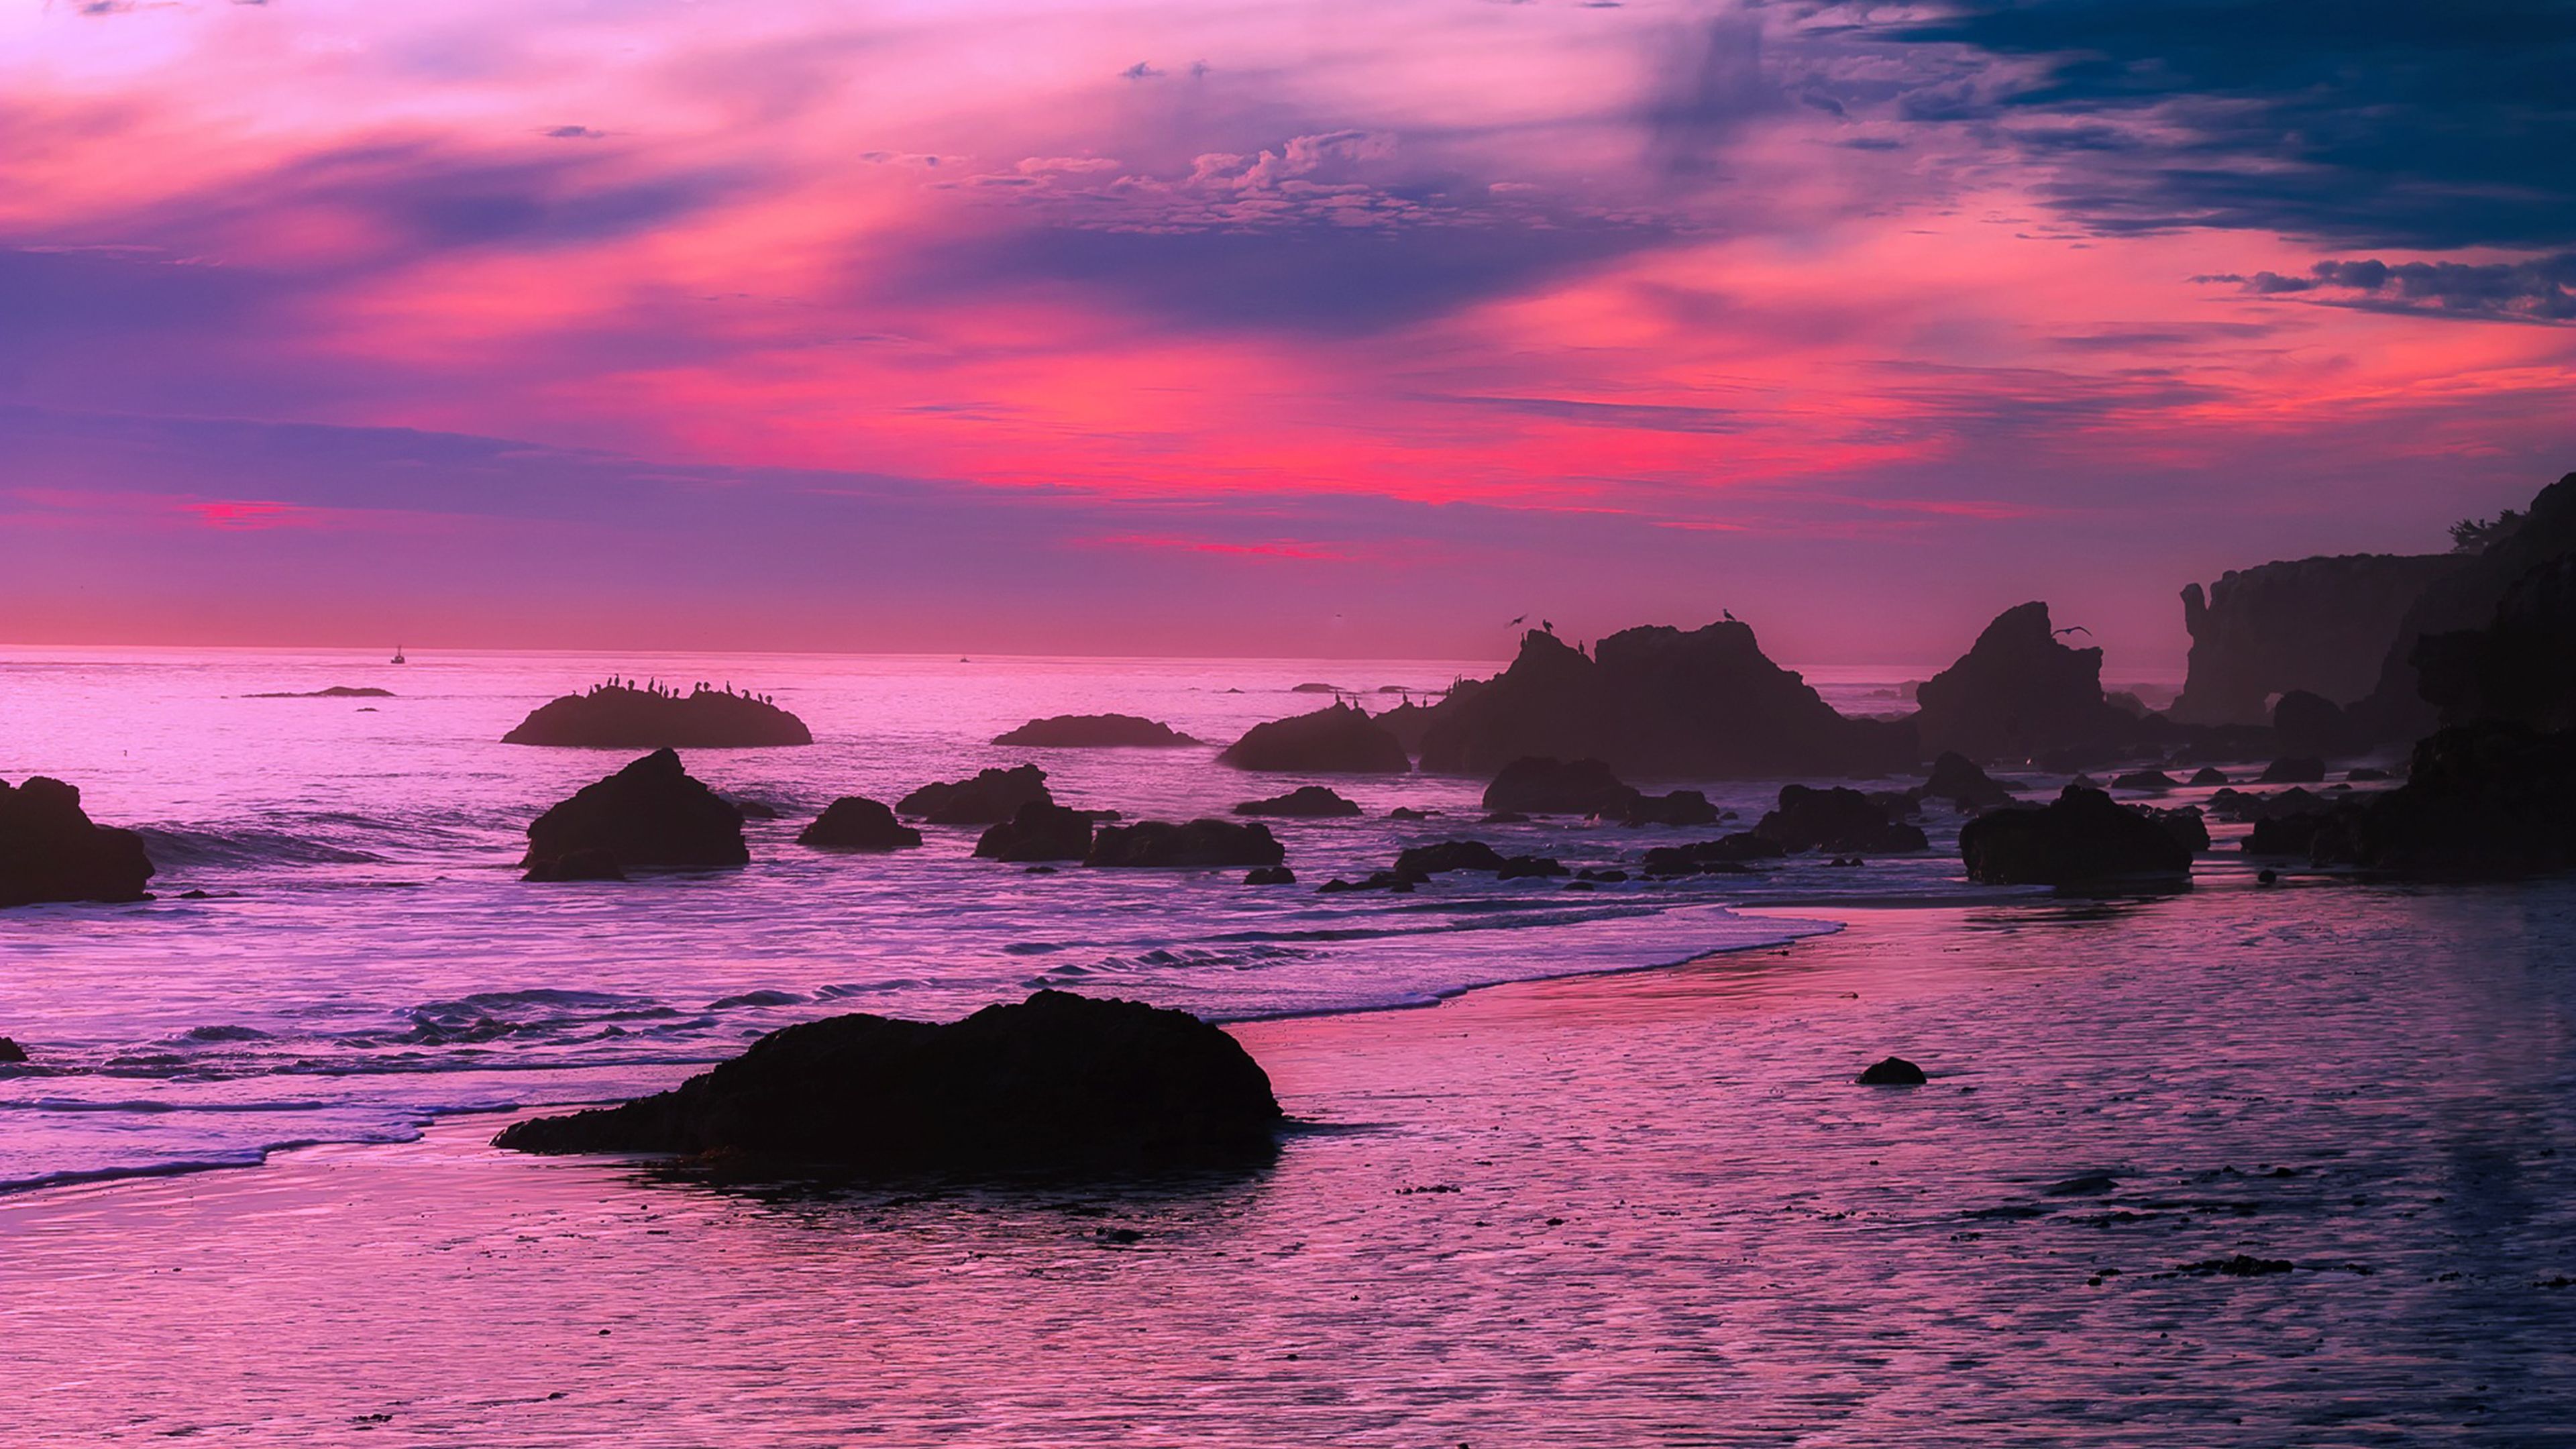 A beautiful sunset over the rocky coastline of California's Big Sur region. - Chromebook